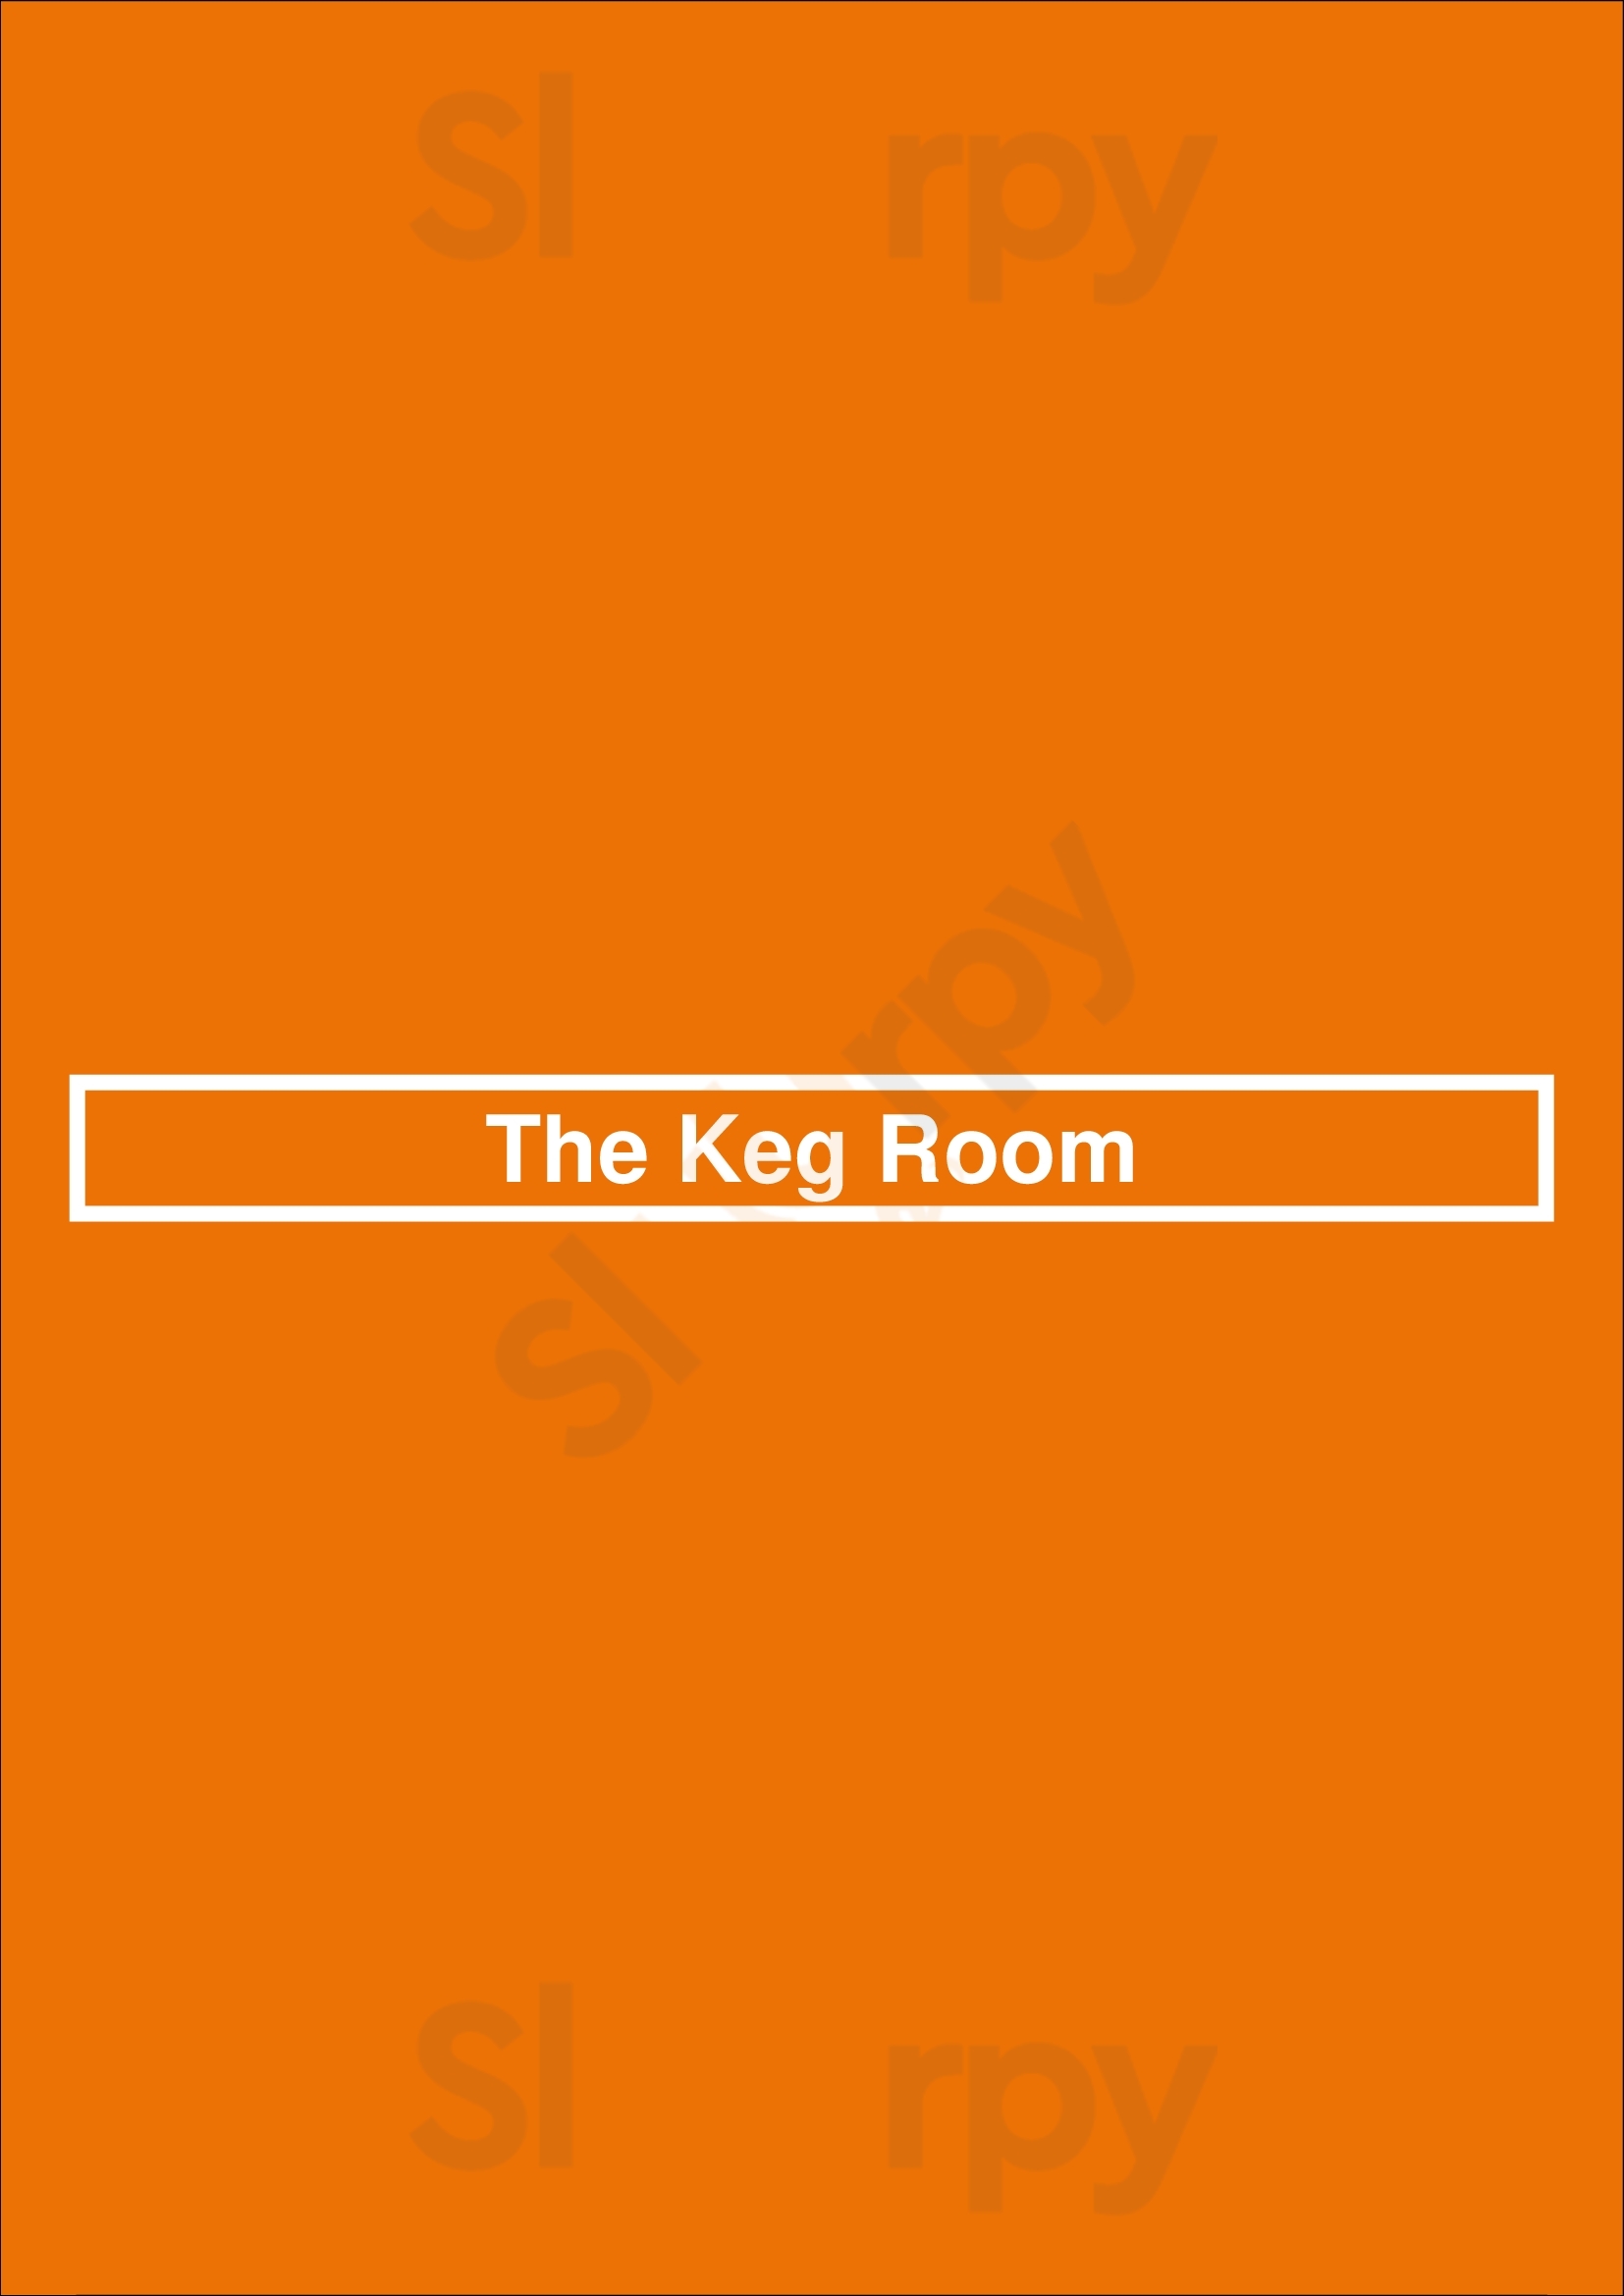 The Keg Room New York City Menu - 1